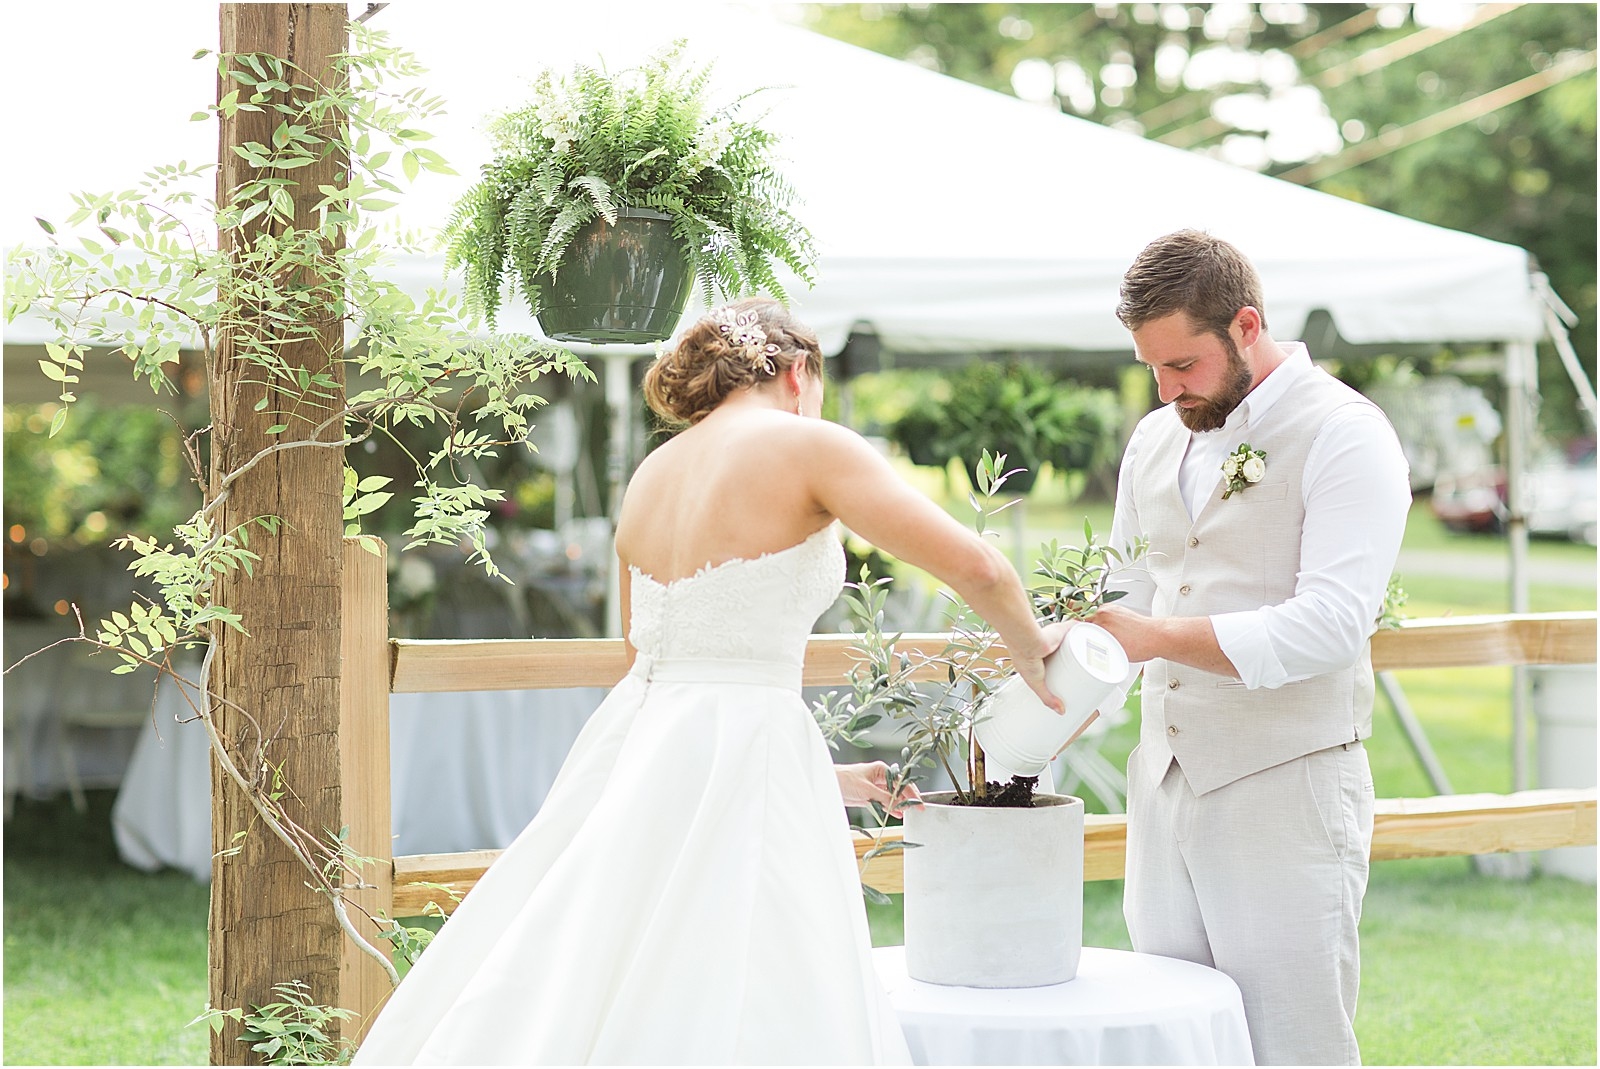 A Evansville Indiana Backyard Wedding | Bailey and Ben 067.jpg